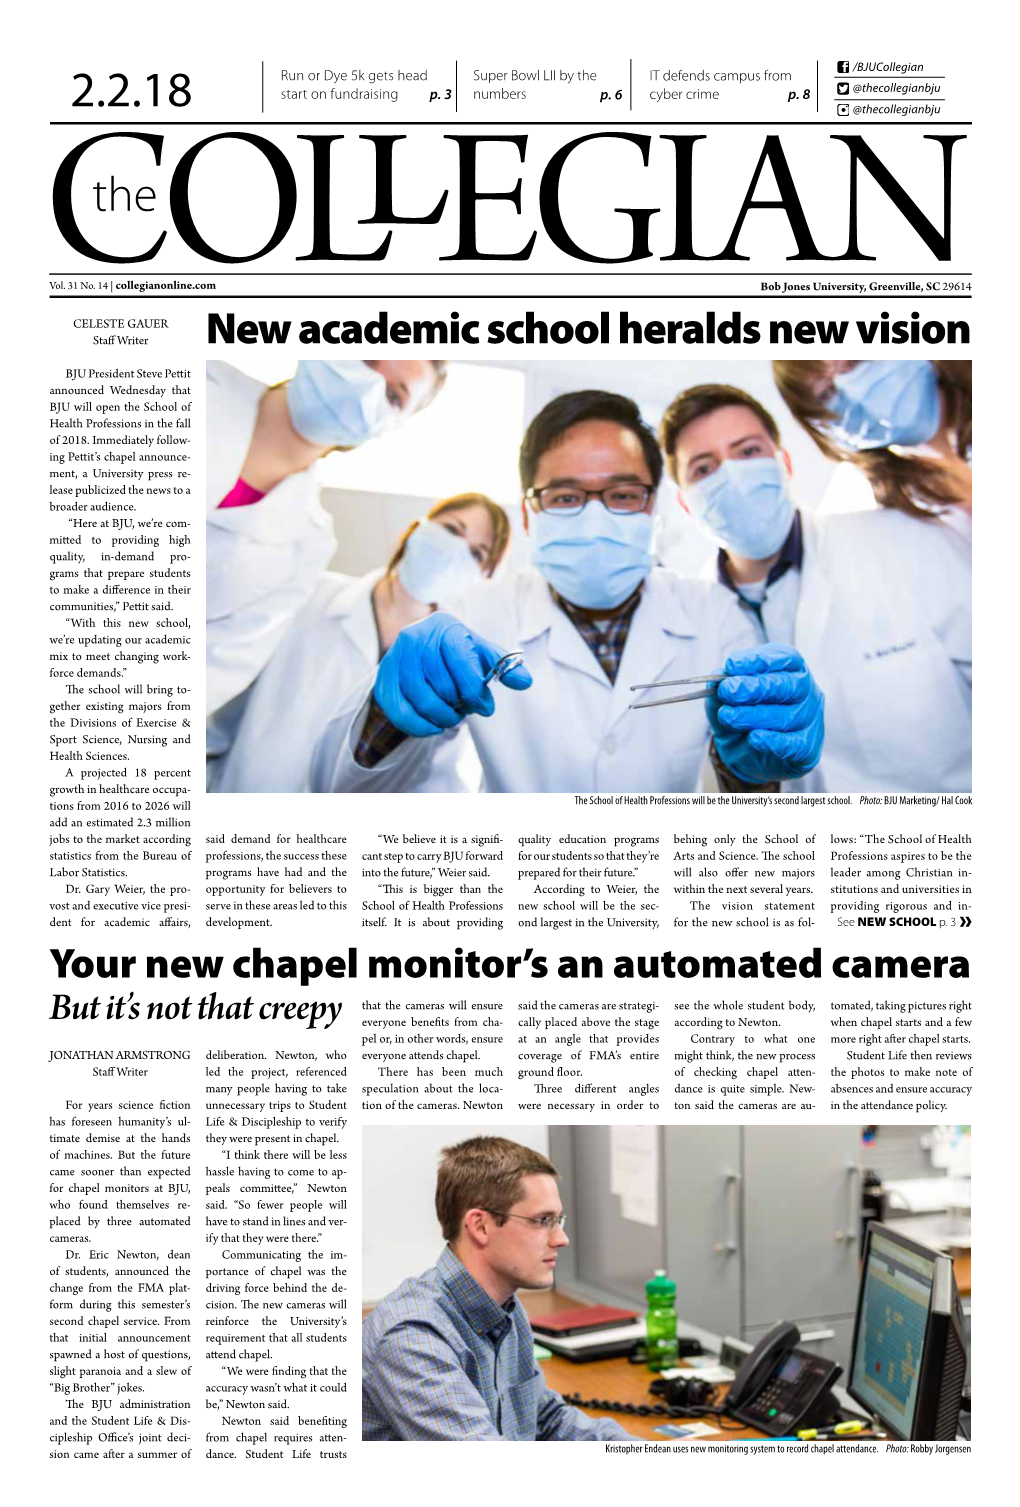 New Academic School Heralds New Vision